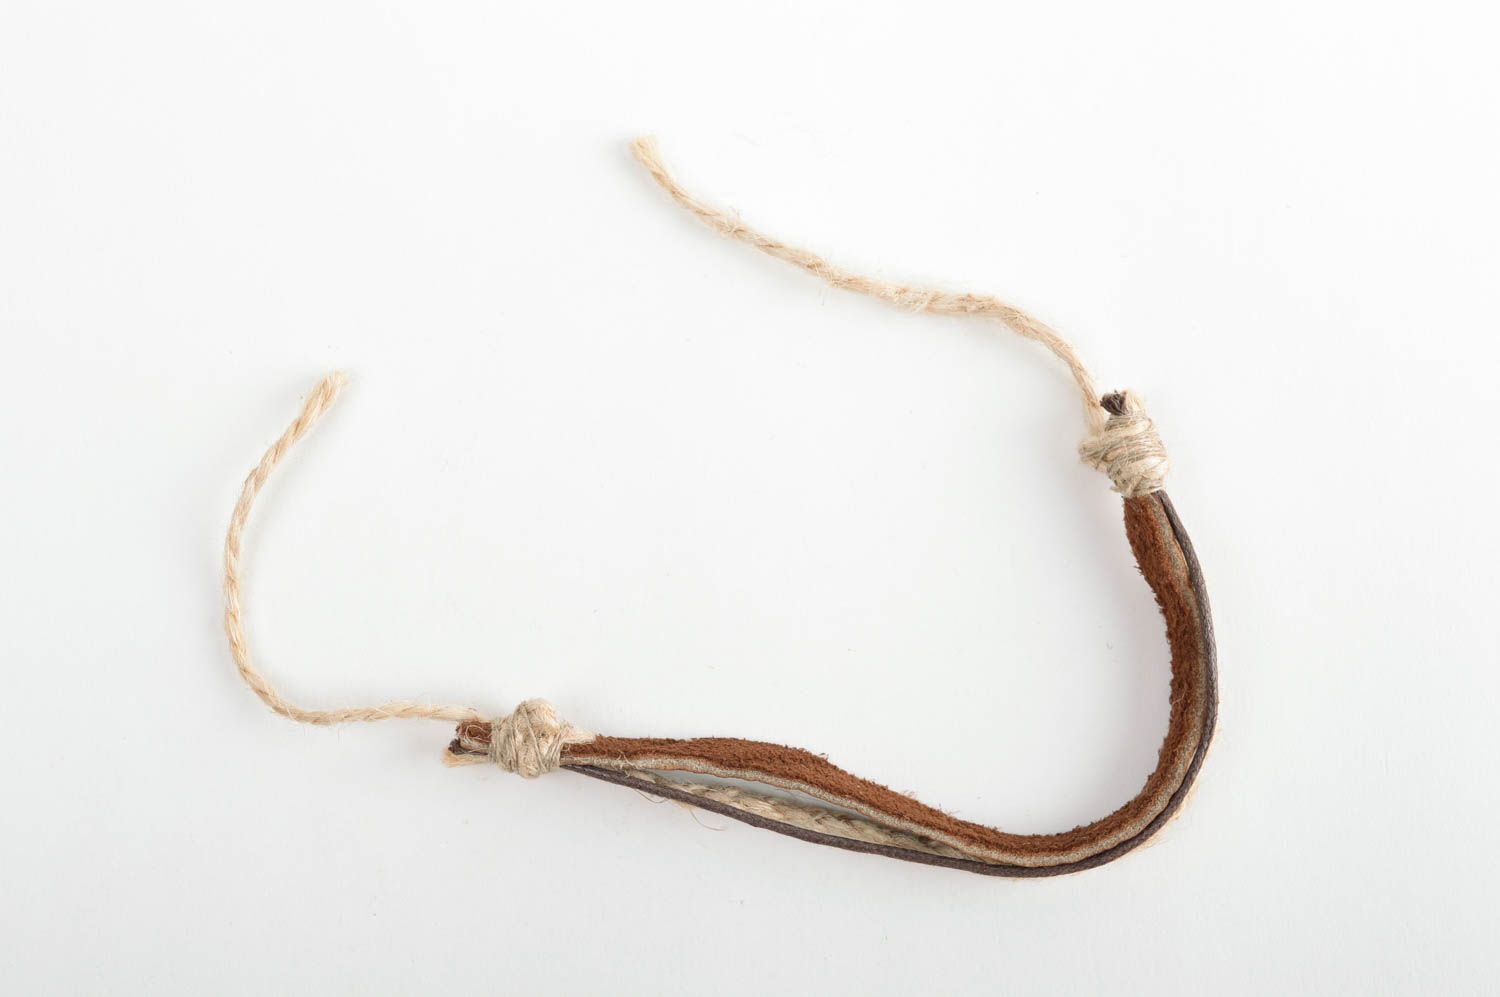 Handmade leather bracelet fashion trends artisan jewelry designs gift ideas photo 4